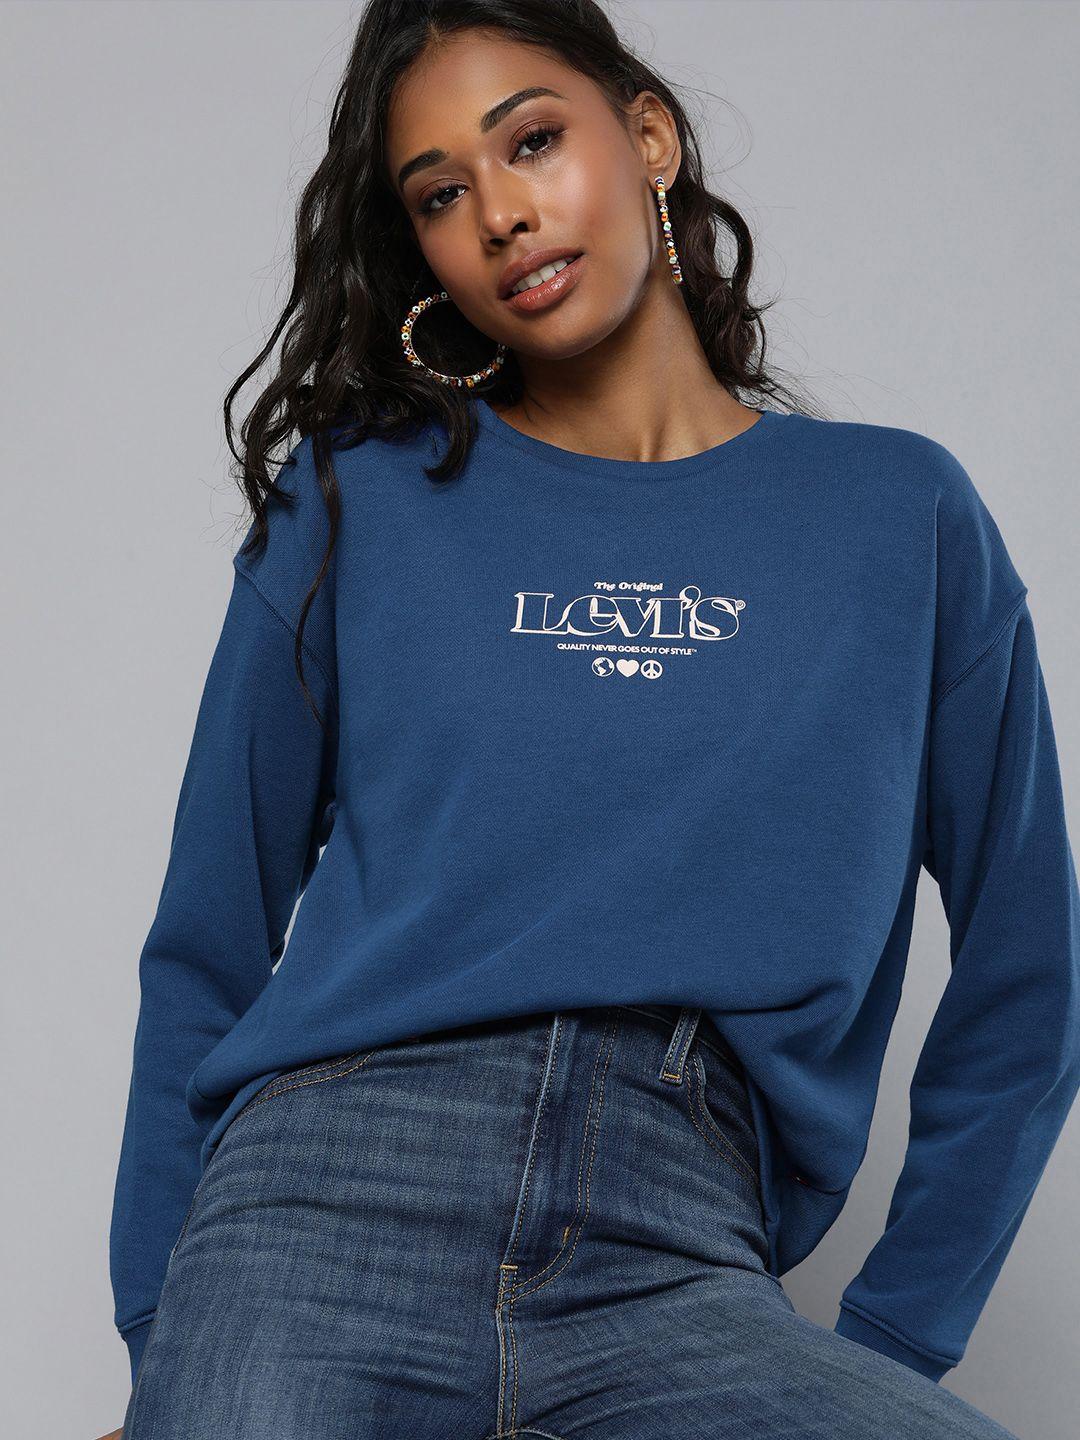 levis-women-navy-blue-logo-printed-sweatshirt